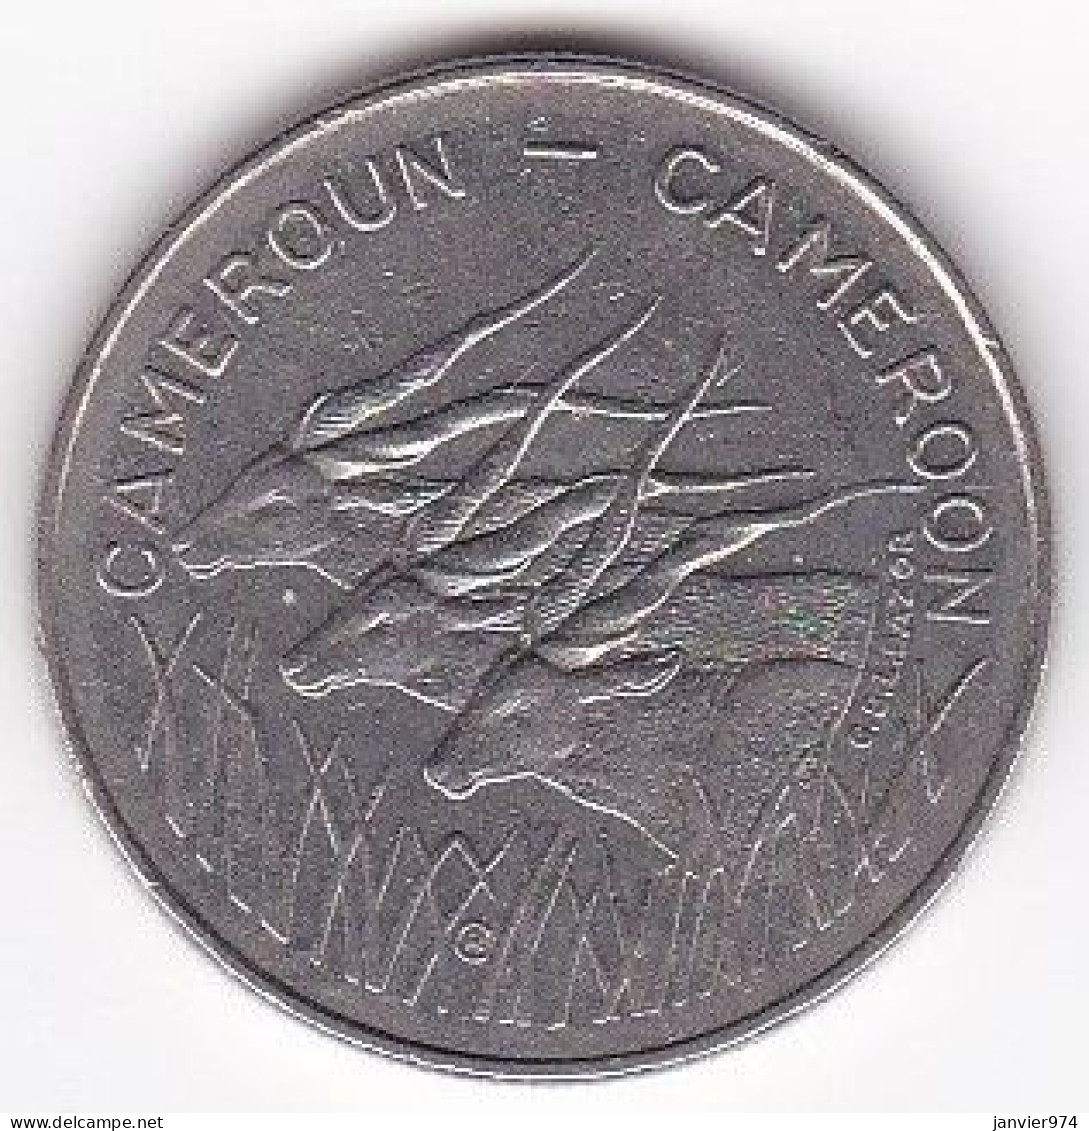 CAMEROUN – CAMEROON . 100 Francs 1980 , En Nickel .KM# 17, TTB/XF - Cameroun